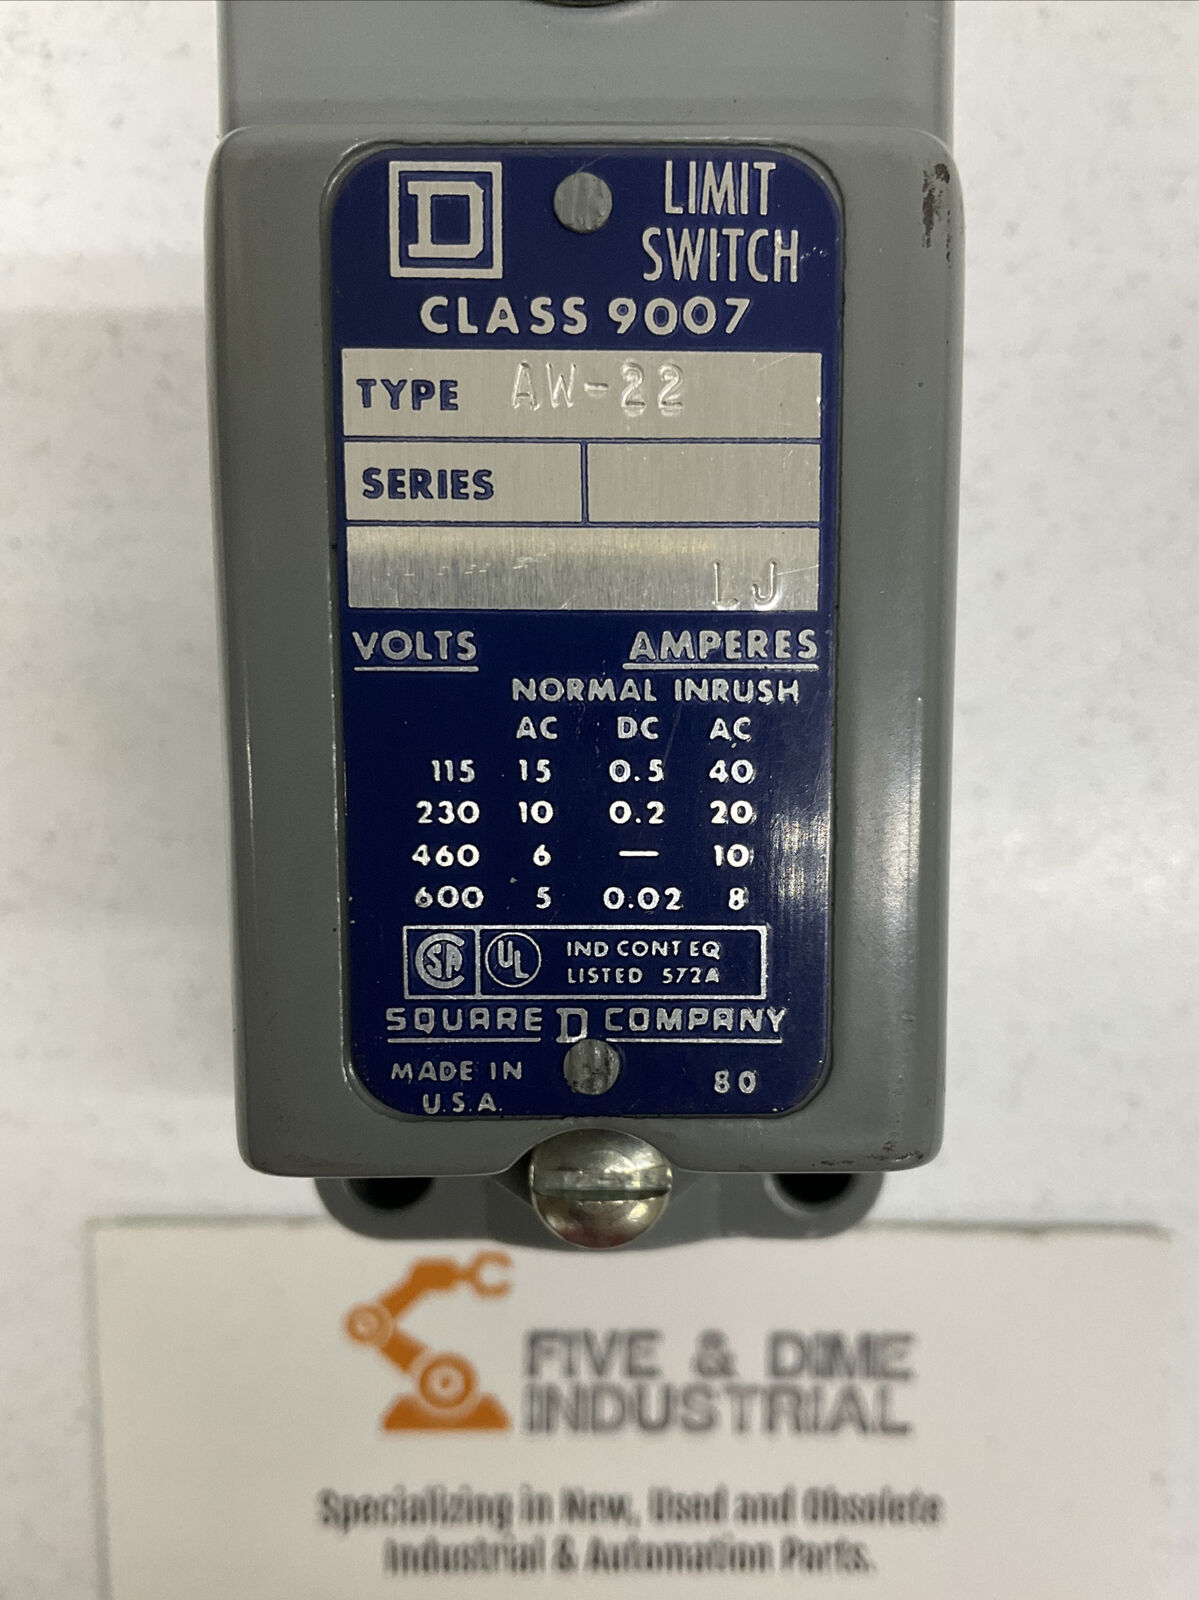 Square D 9007 AW-22 Precision Limit Switch 1 NO, 1 NC 600V  (BL204)